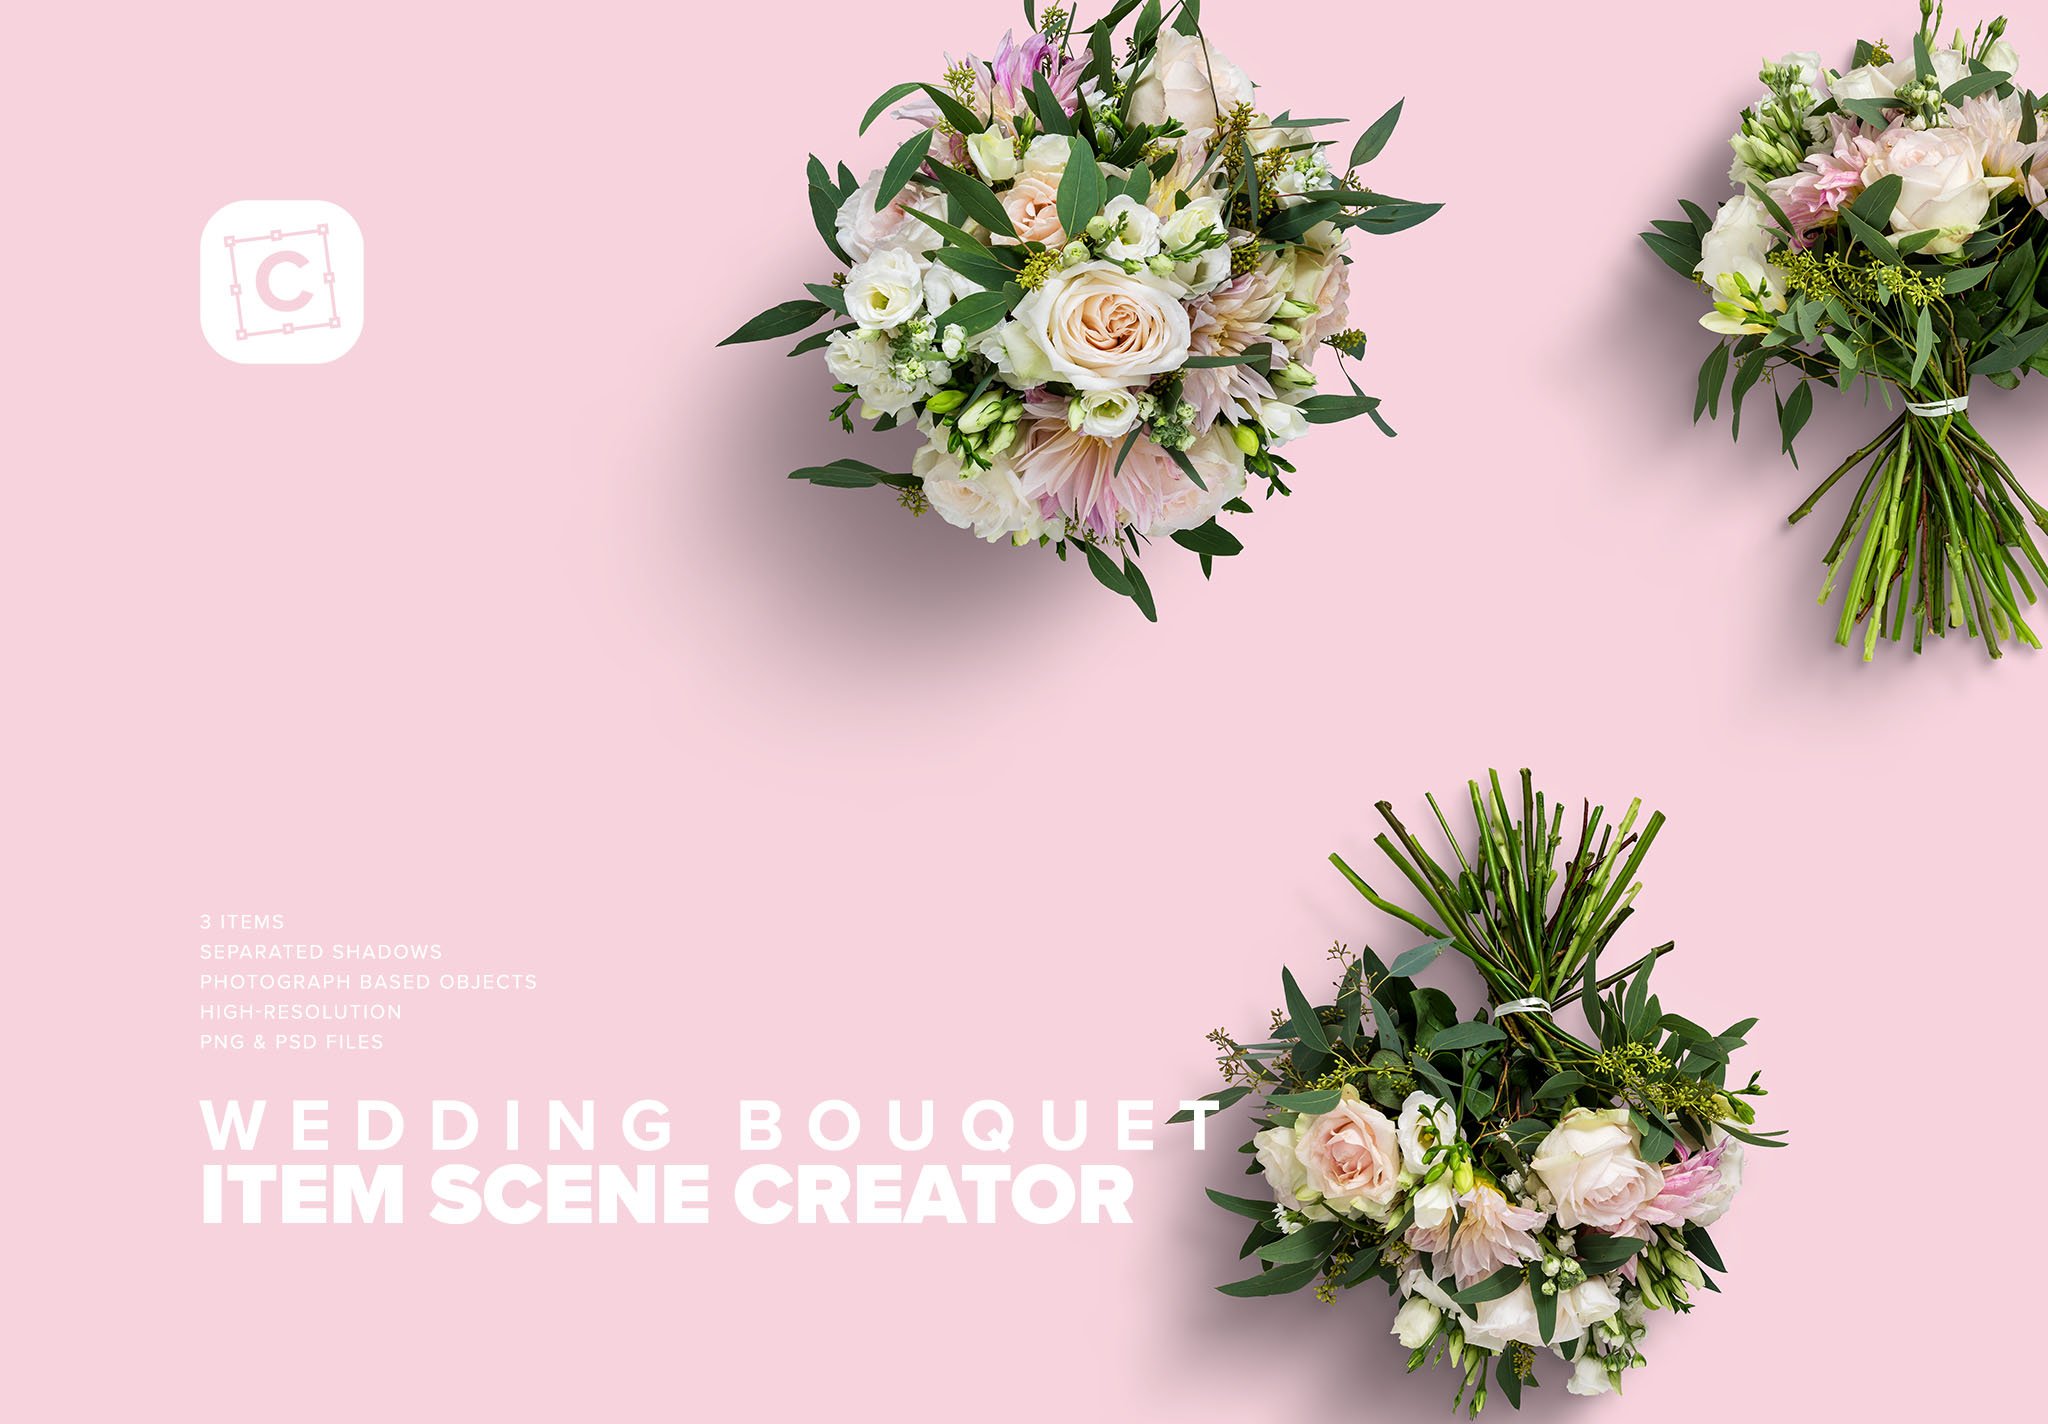 Wedding Bouquet Item Scene Creator cover image.